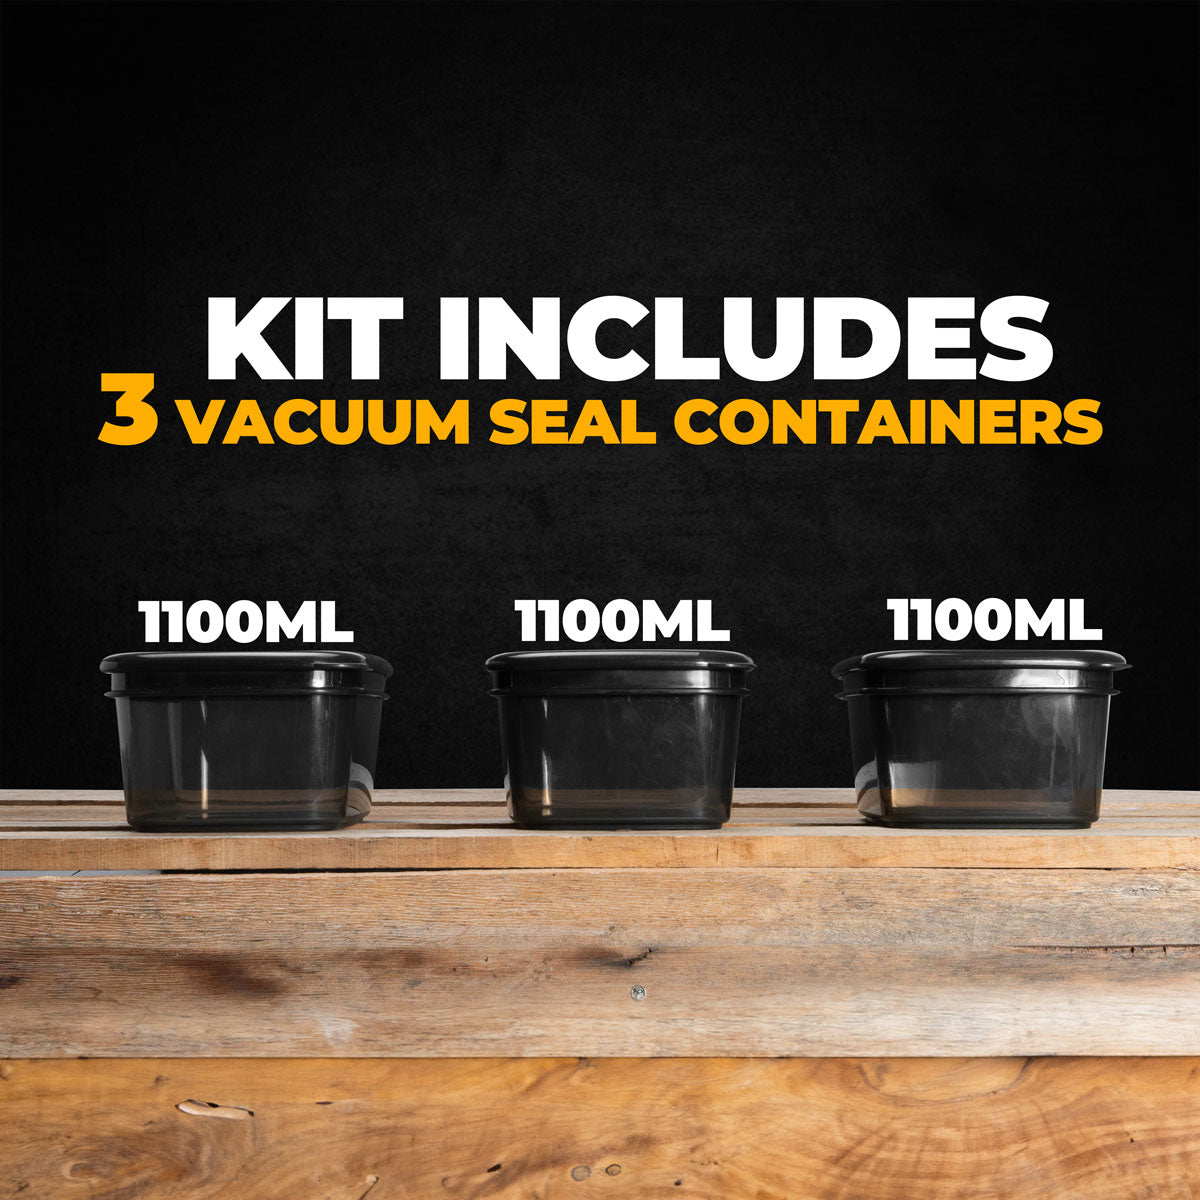 1100ml Reusable Crib Container Set - Black